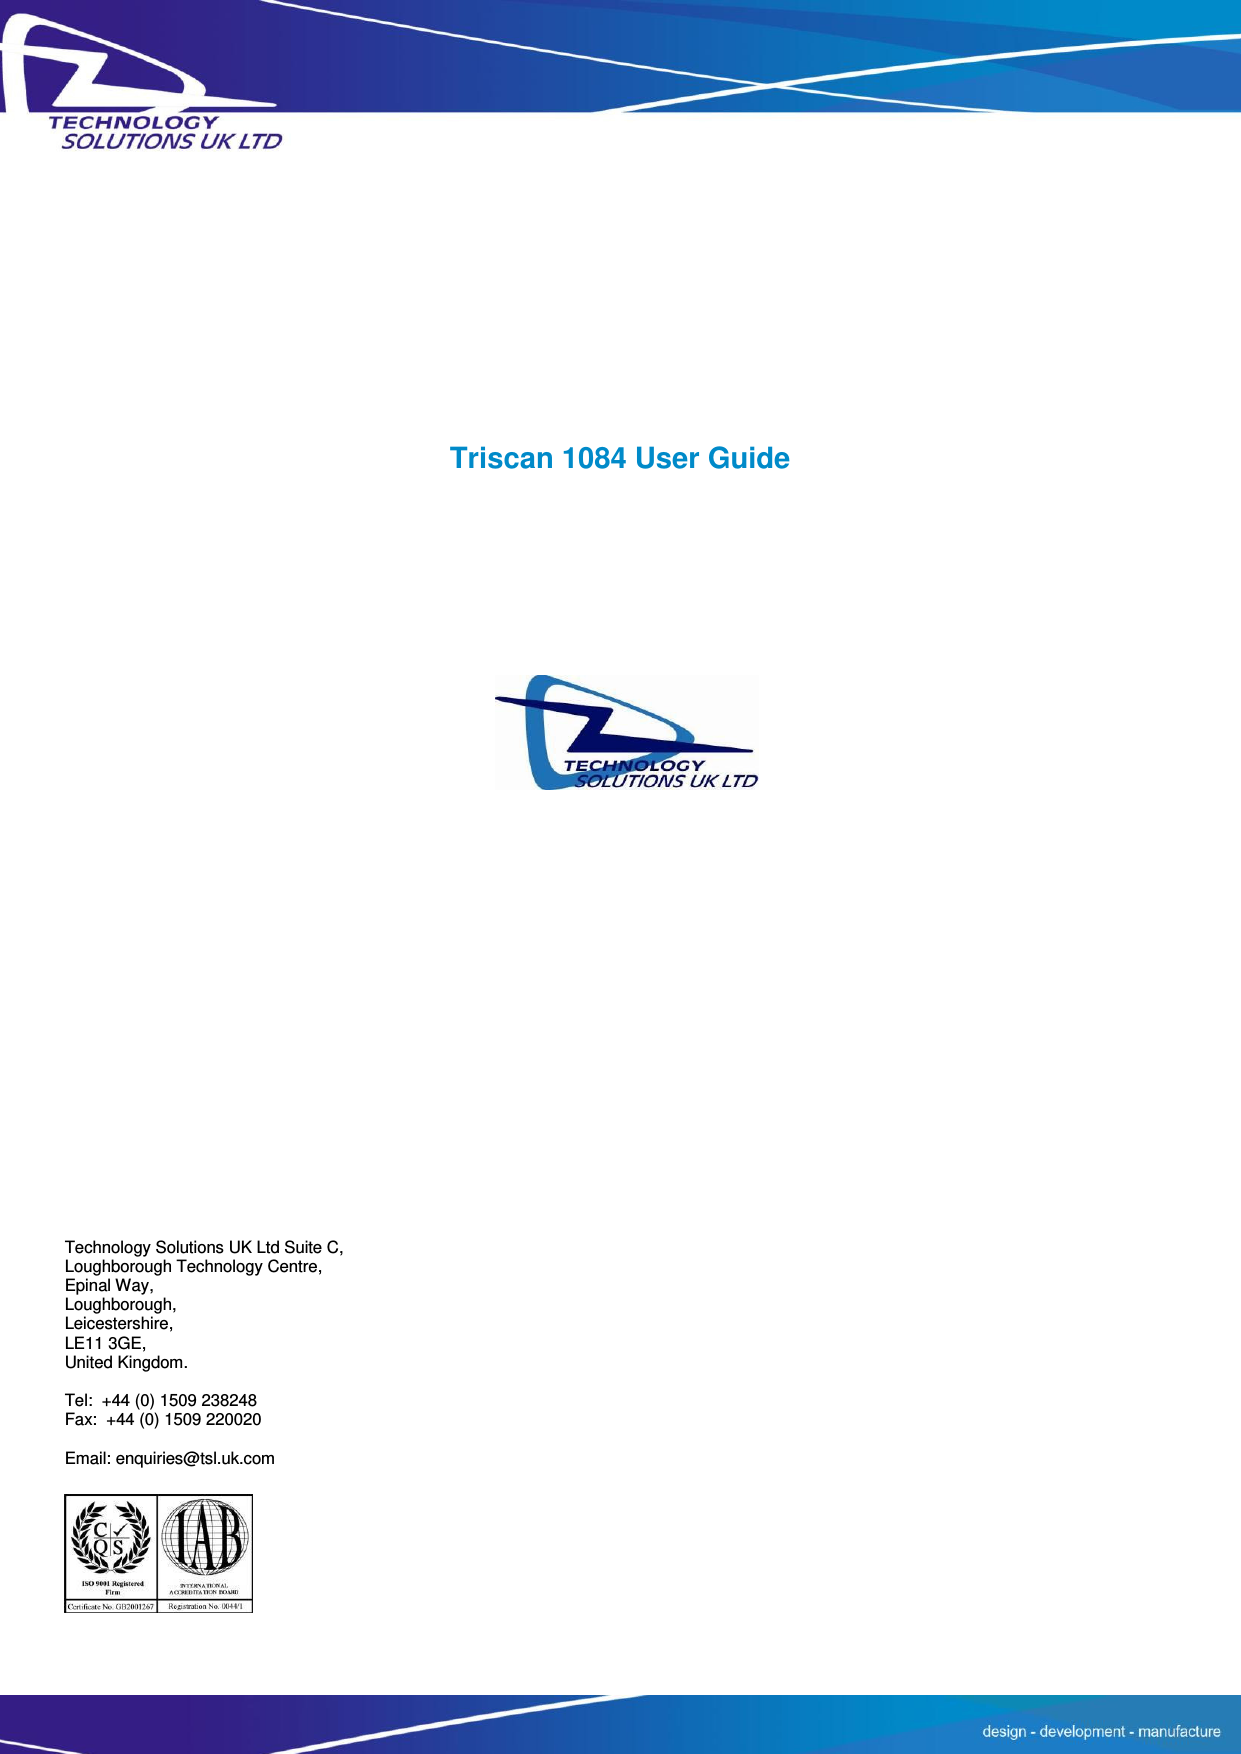               Triscan 1084 User GuideTechnology Solutions UK Ltd Suite C, Loughborough Technology Centre, Epinal Way, Loughborough, Leicestershire, LE11 3GE, United Kingdom.  Tel:  +44 (0) 1509 238248 Fax:  +44 (0) 1509 220020  Email: enquiries@tsl.uk.com 